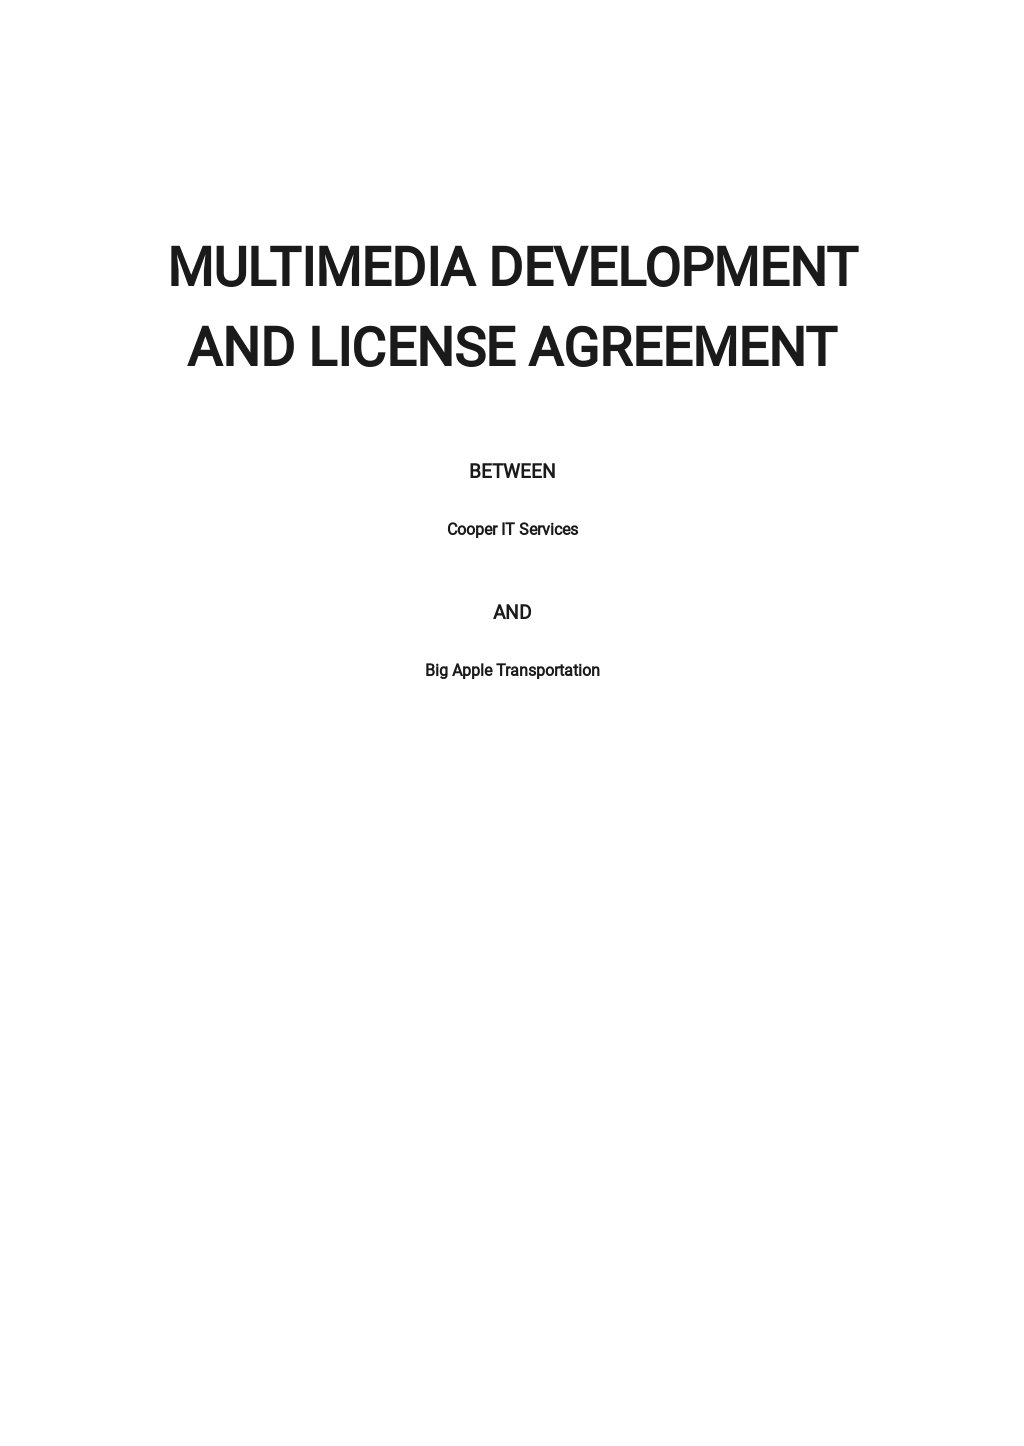 Multimedia Development and License Agreement Template.jpe